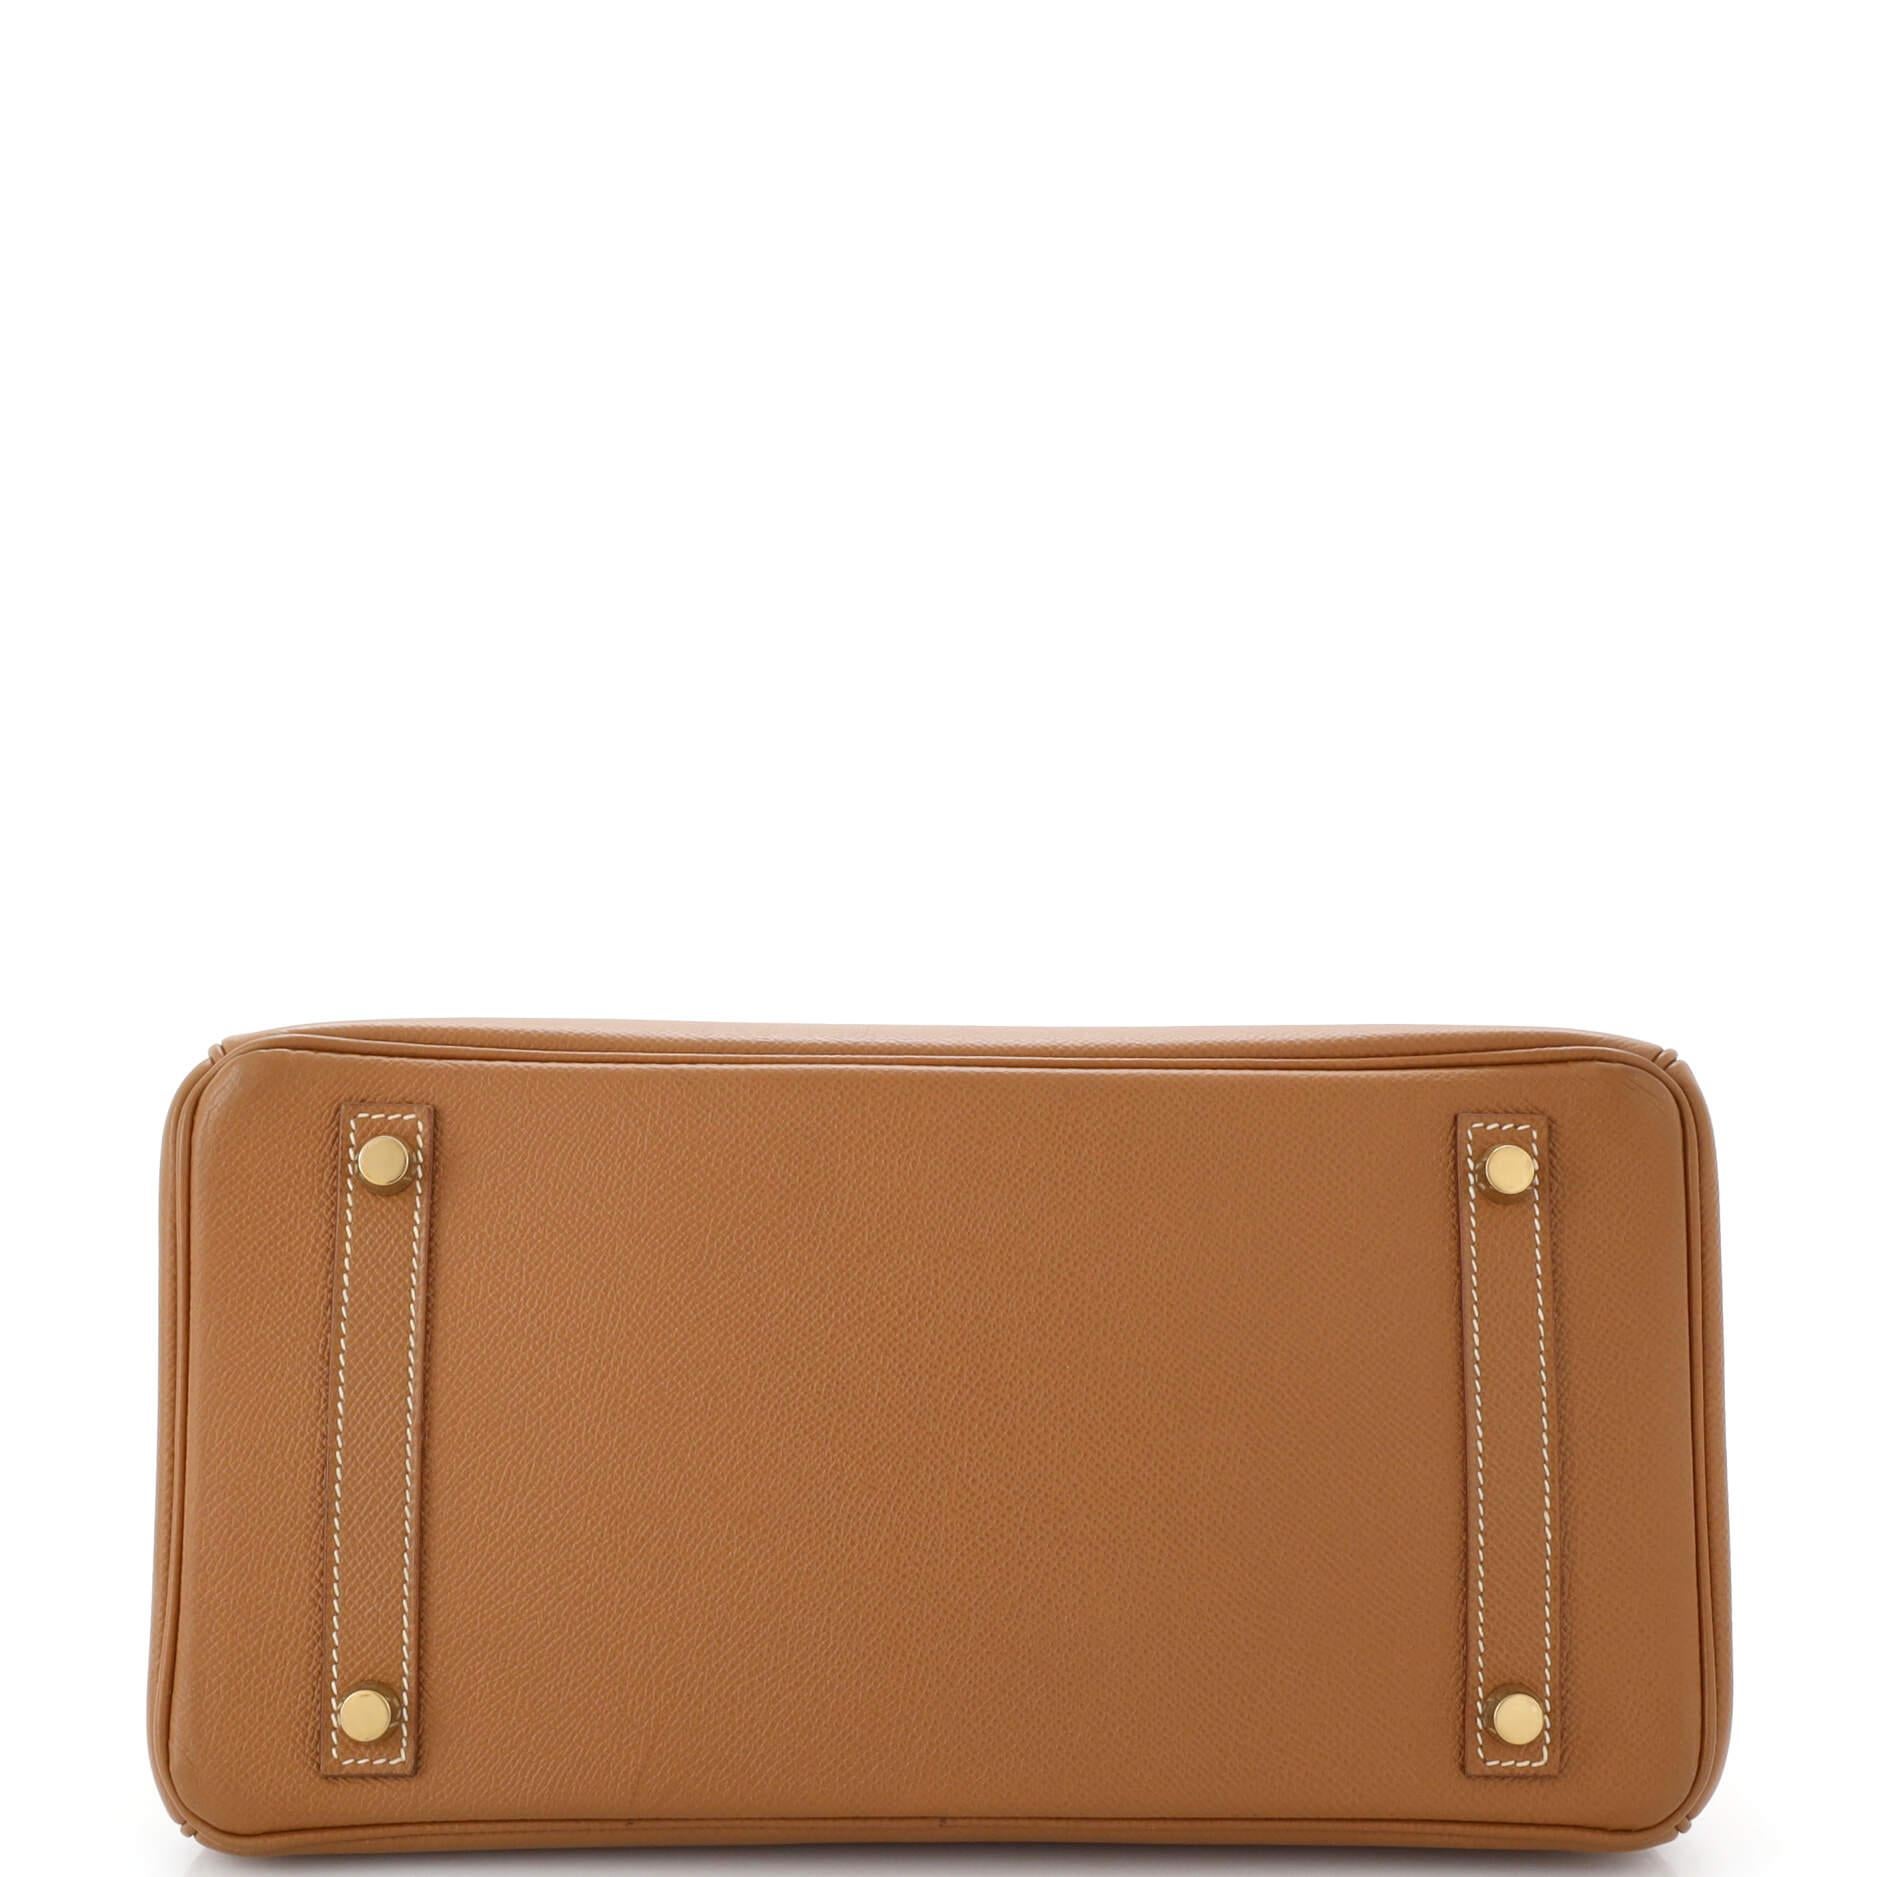 Hermes Birkin Handbag Gold Epsom with Gold Hardware 30 1